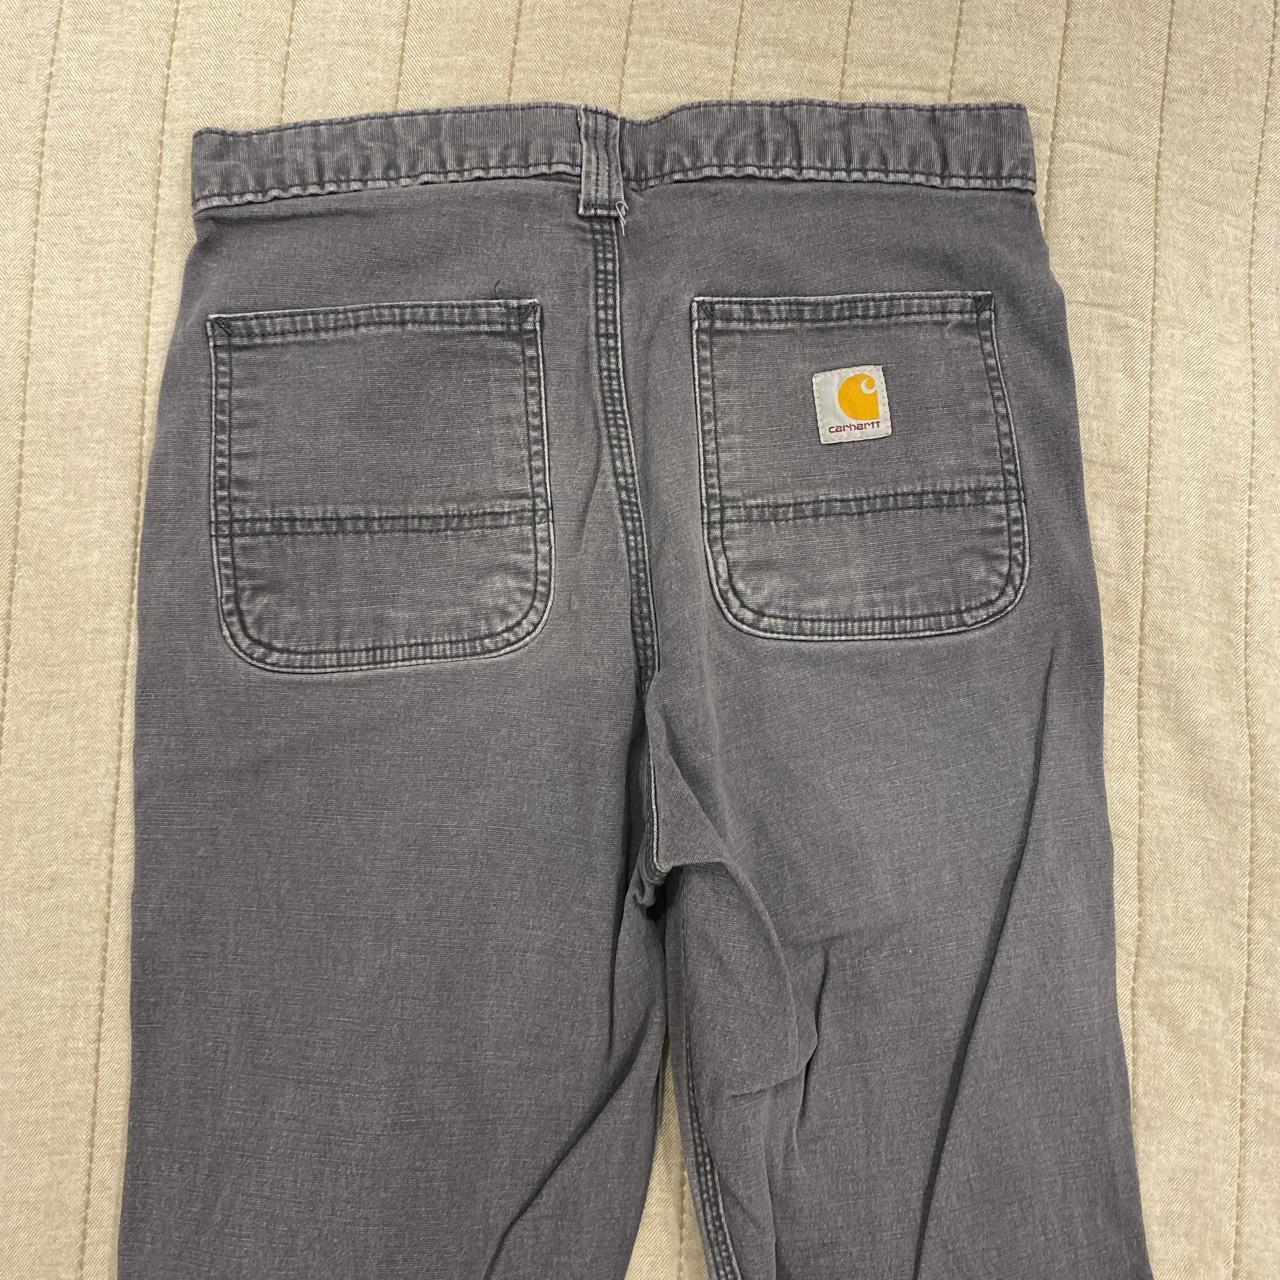 Carhartt work pants grey - size 30x34 - Depop